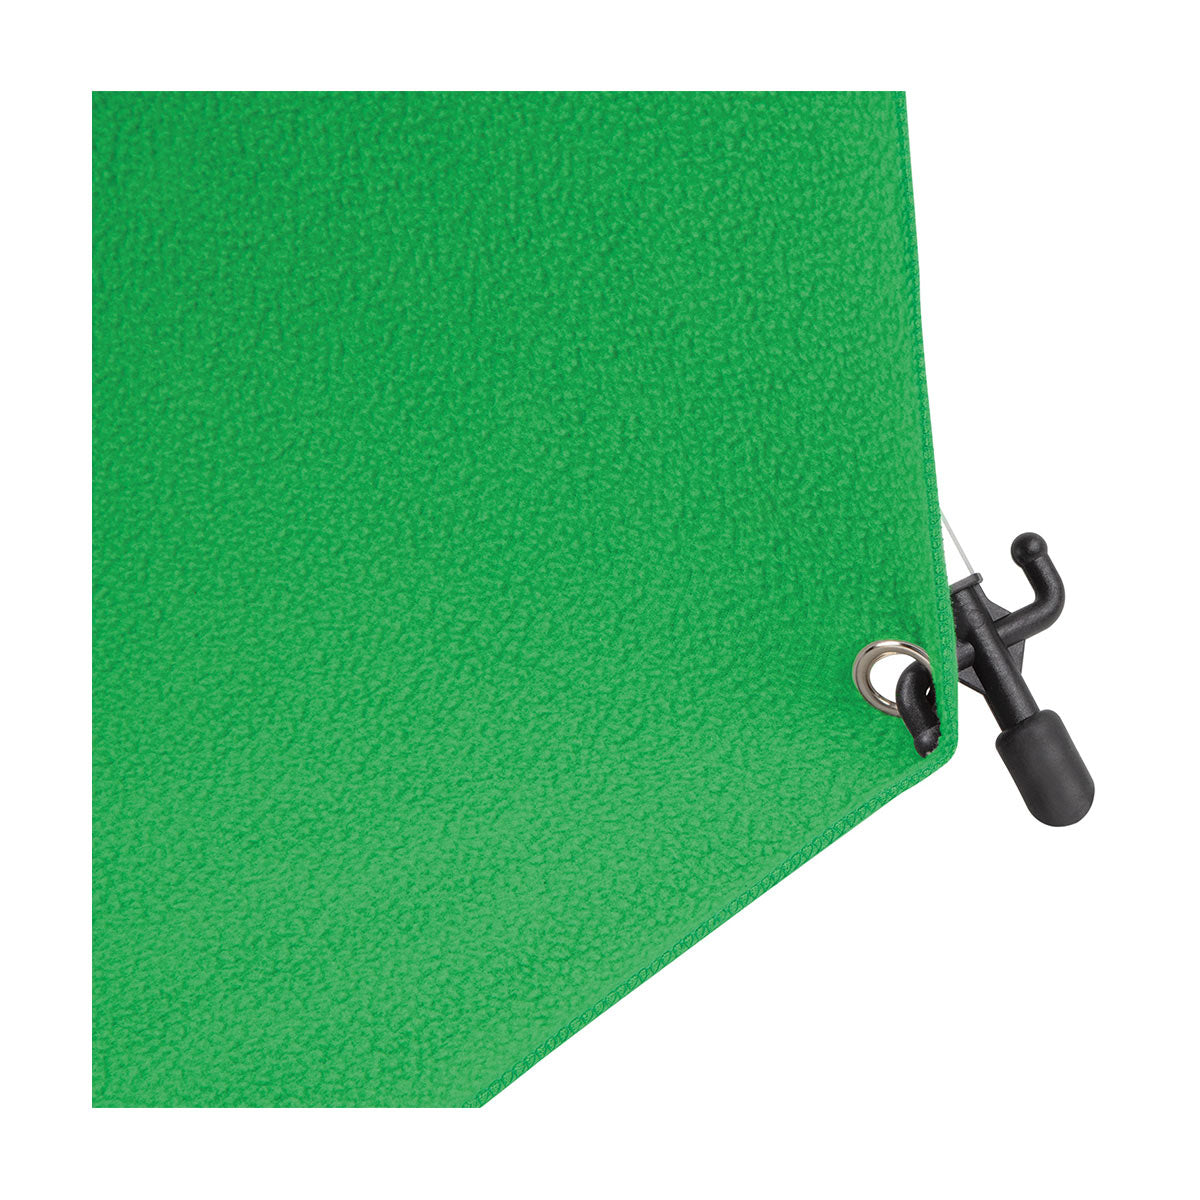 Westcott X-Drop Pro Wrinkle-Resistant Backdrop Kit - Chroma-Key Green Screen (8' x 8')